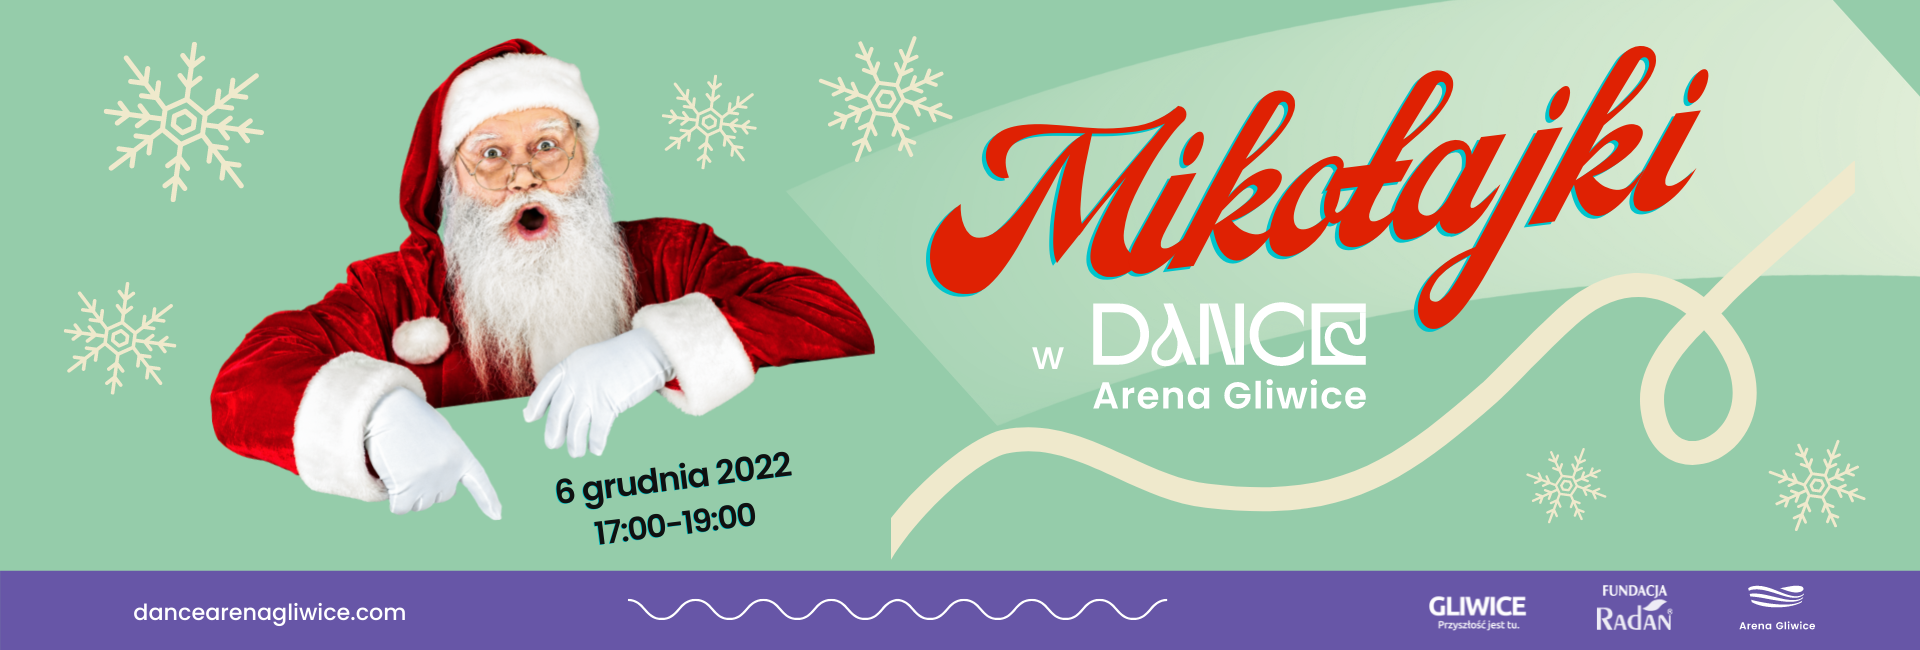 Mikołajki z DANCE Arena Gliwice • DANCE Arena Gliwice